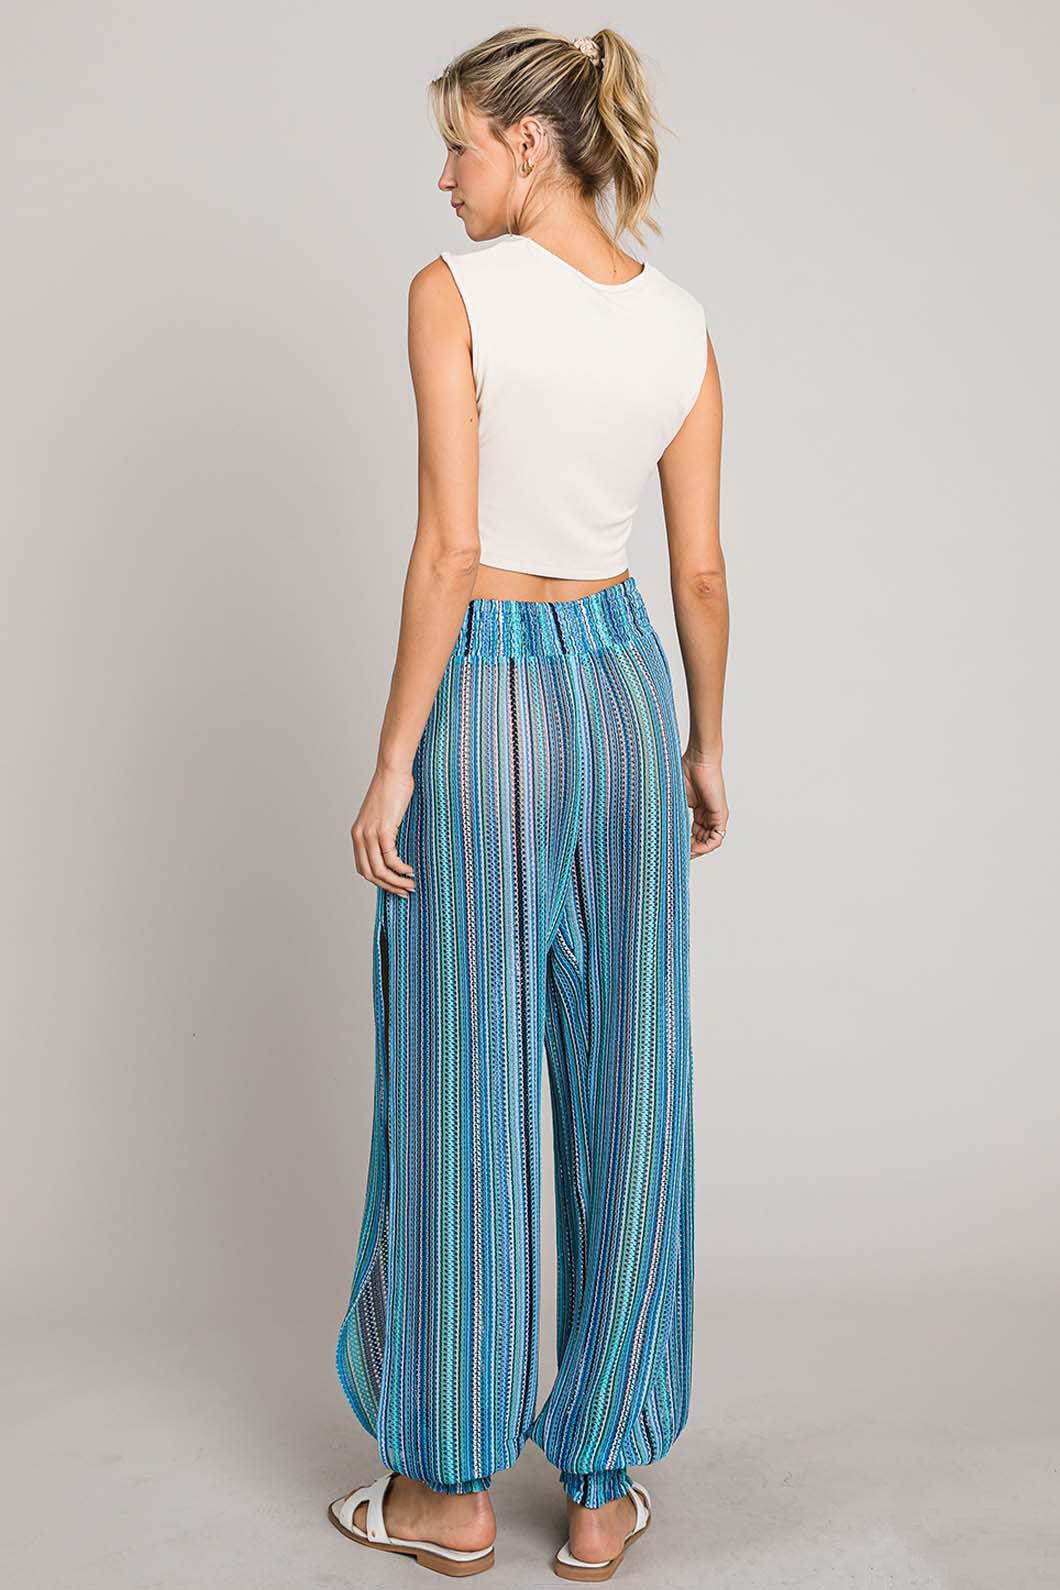 Bona Fide Fashion - Striped Smocked Cover Up Pants - Women Fashion - Bona Fide Fashion